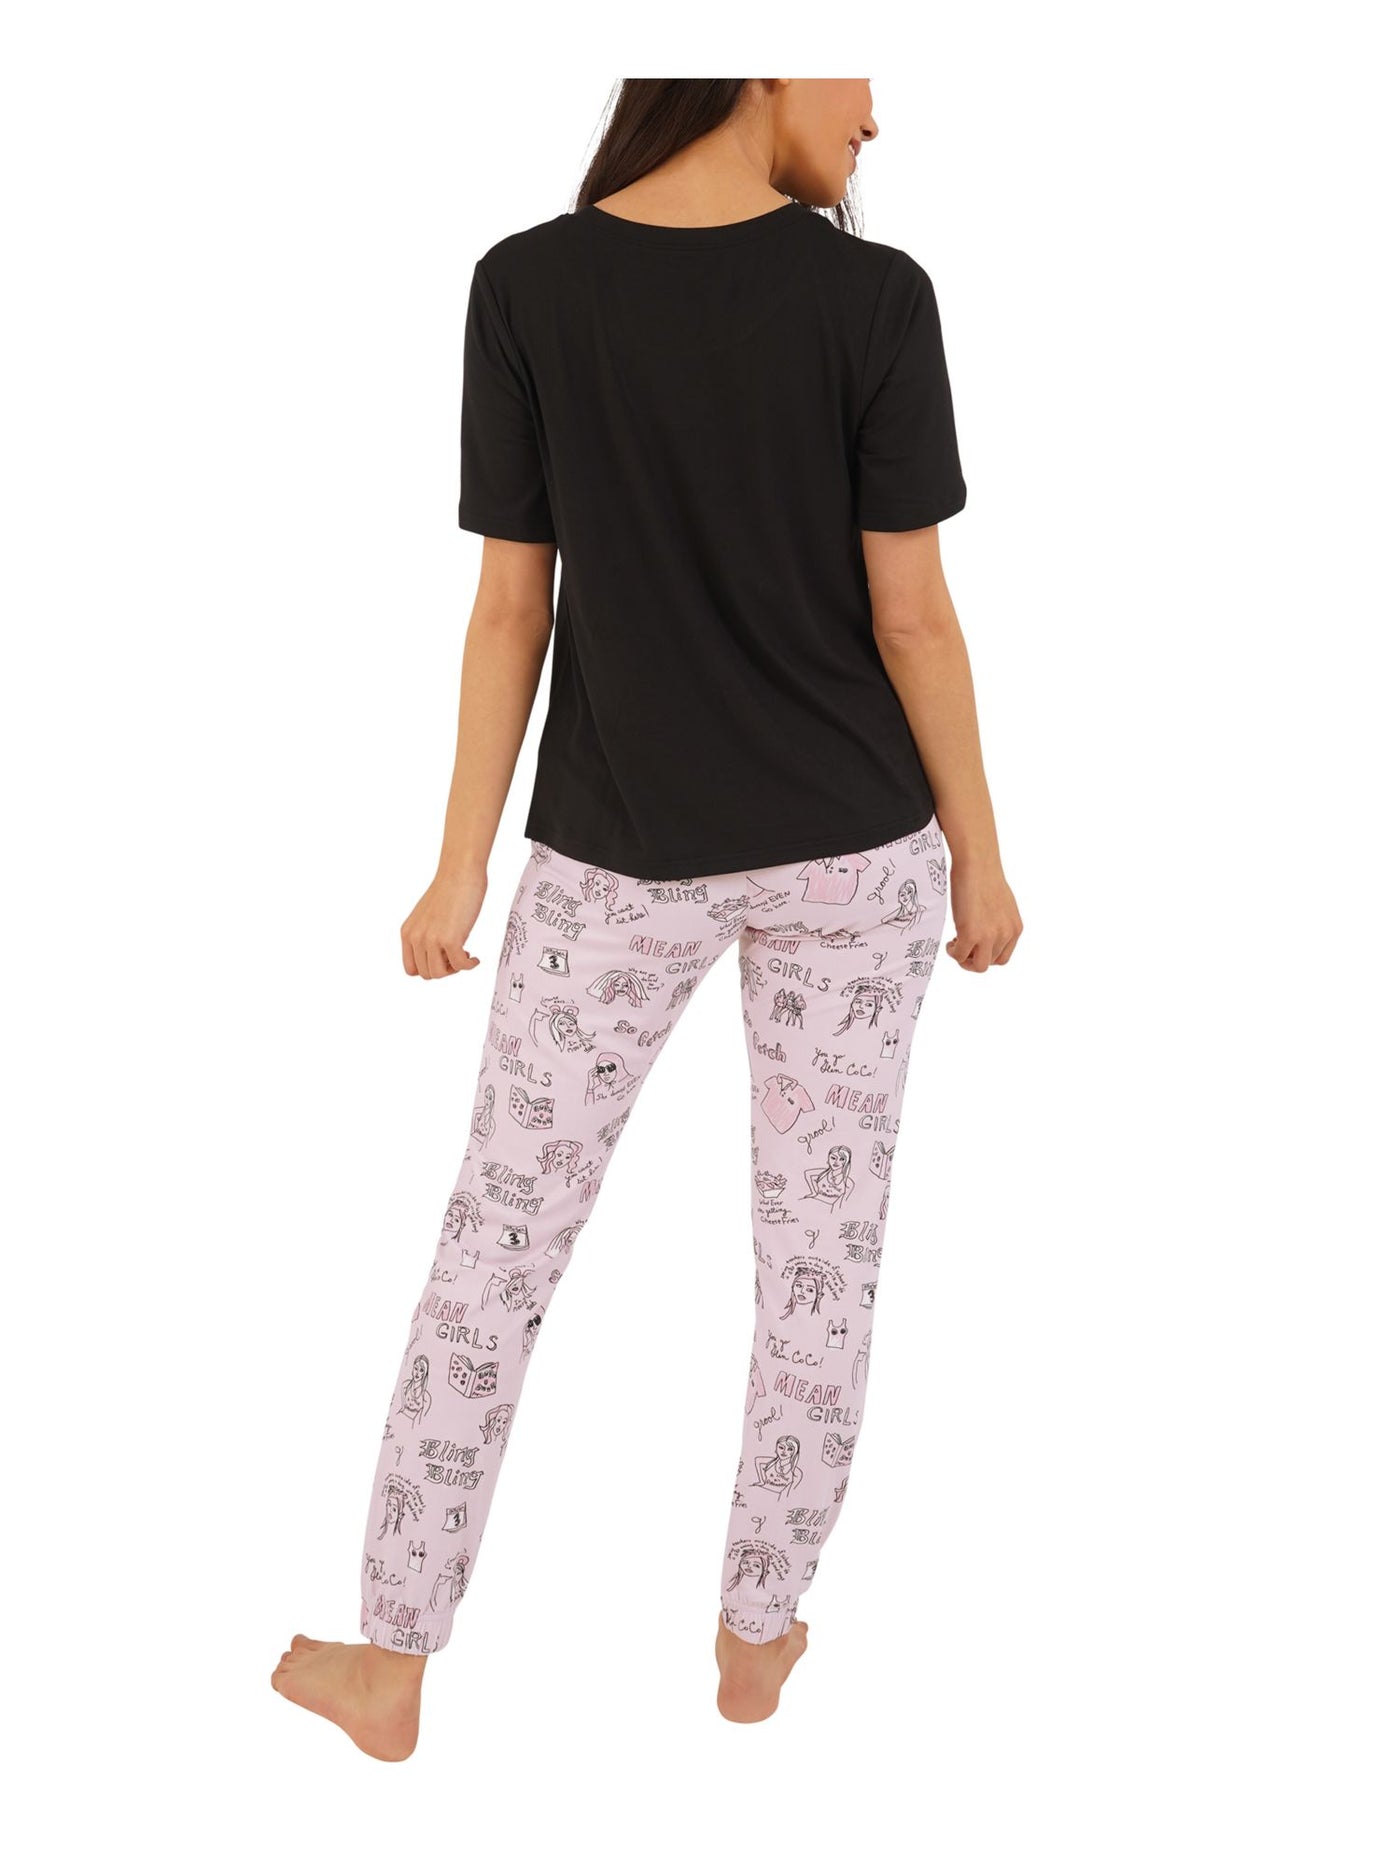 RETROSPECTIVE CO. Womens Black Graphic Elastic Band Short Sleeve T-Shirt Top Cuffed Pants Pajamas S